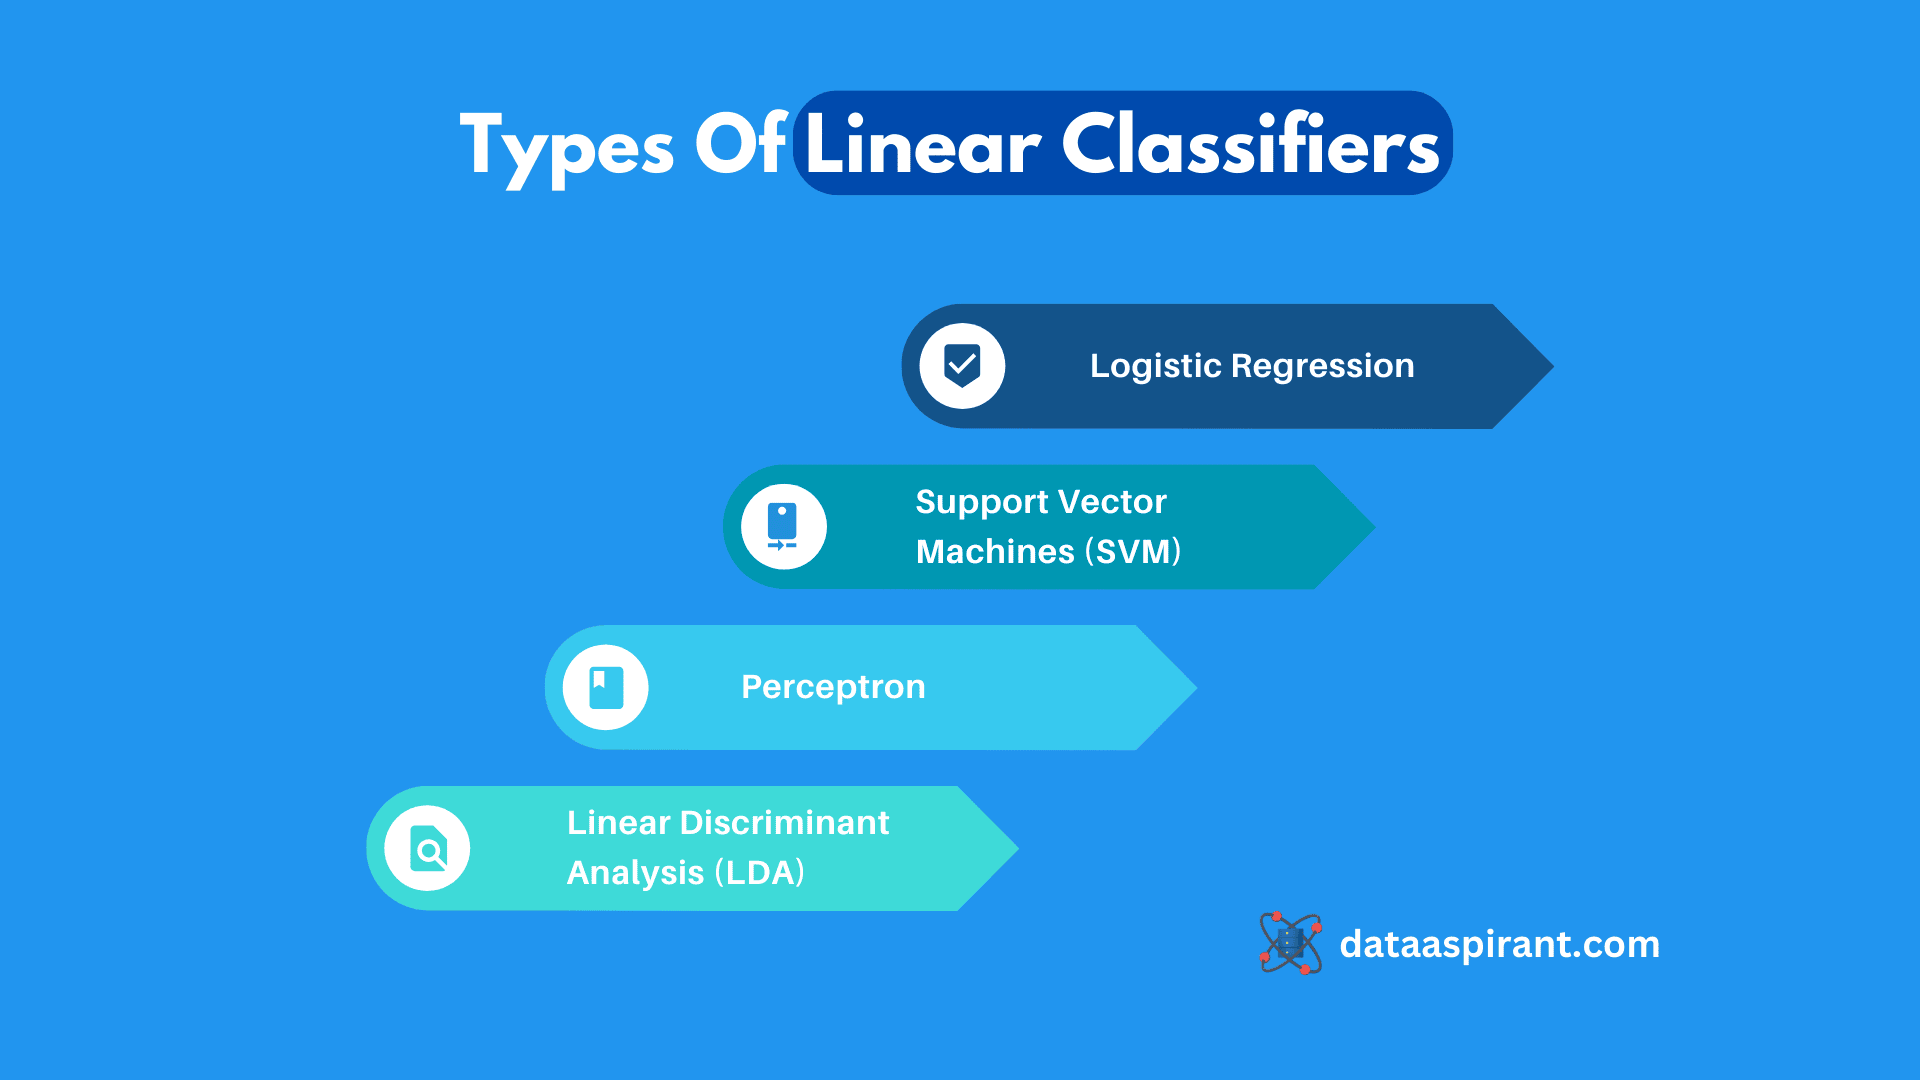 Types of Linear Classifiers